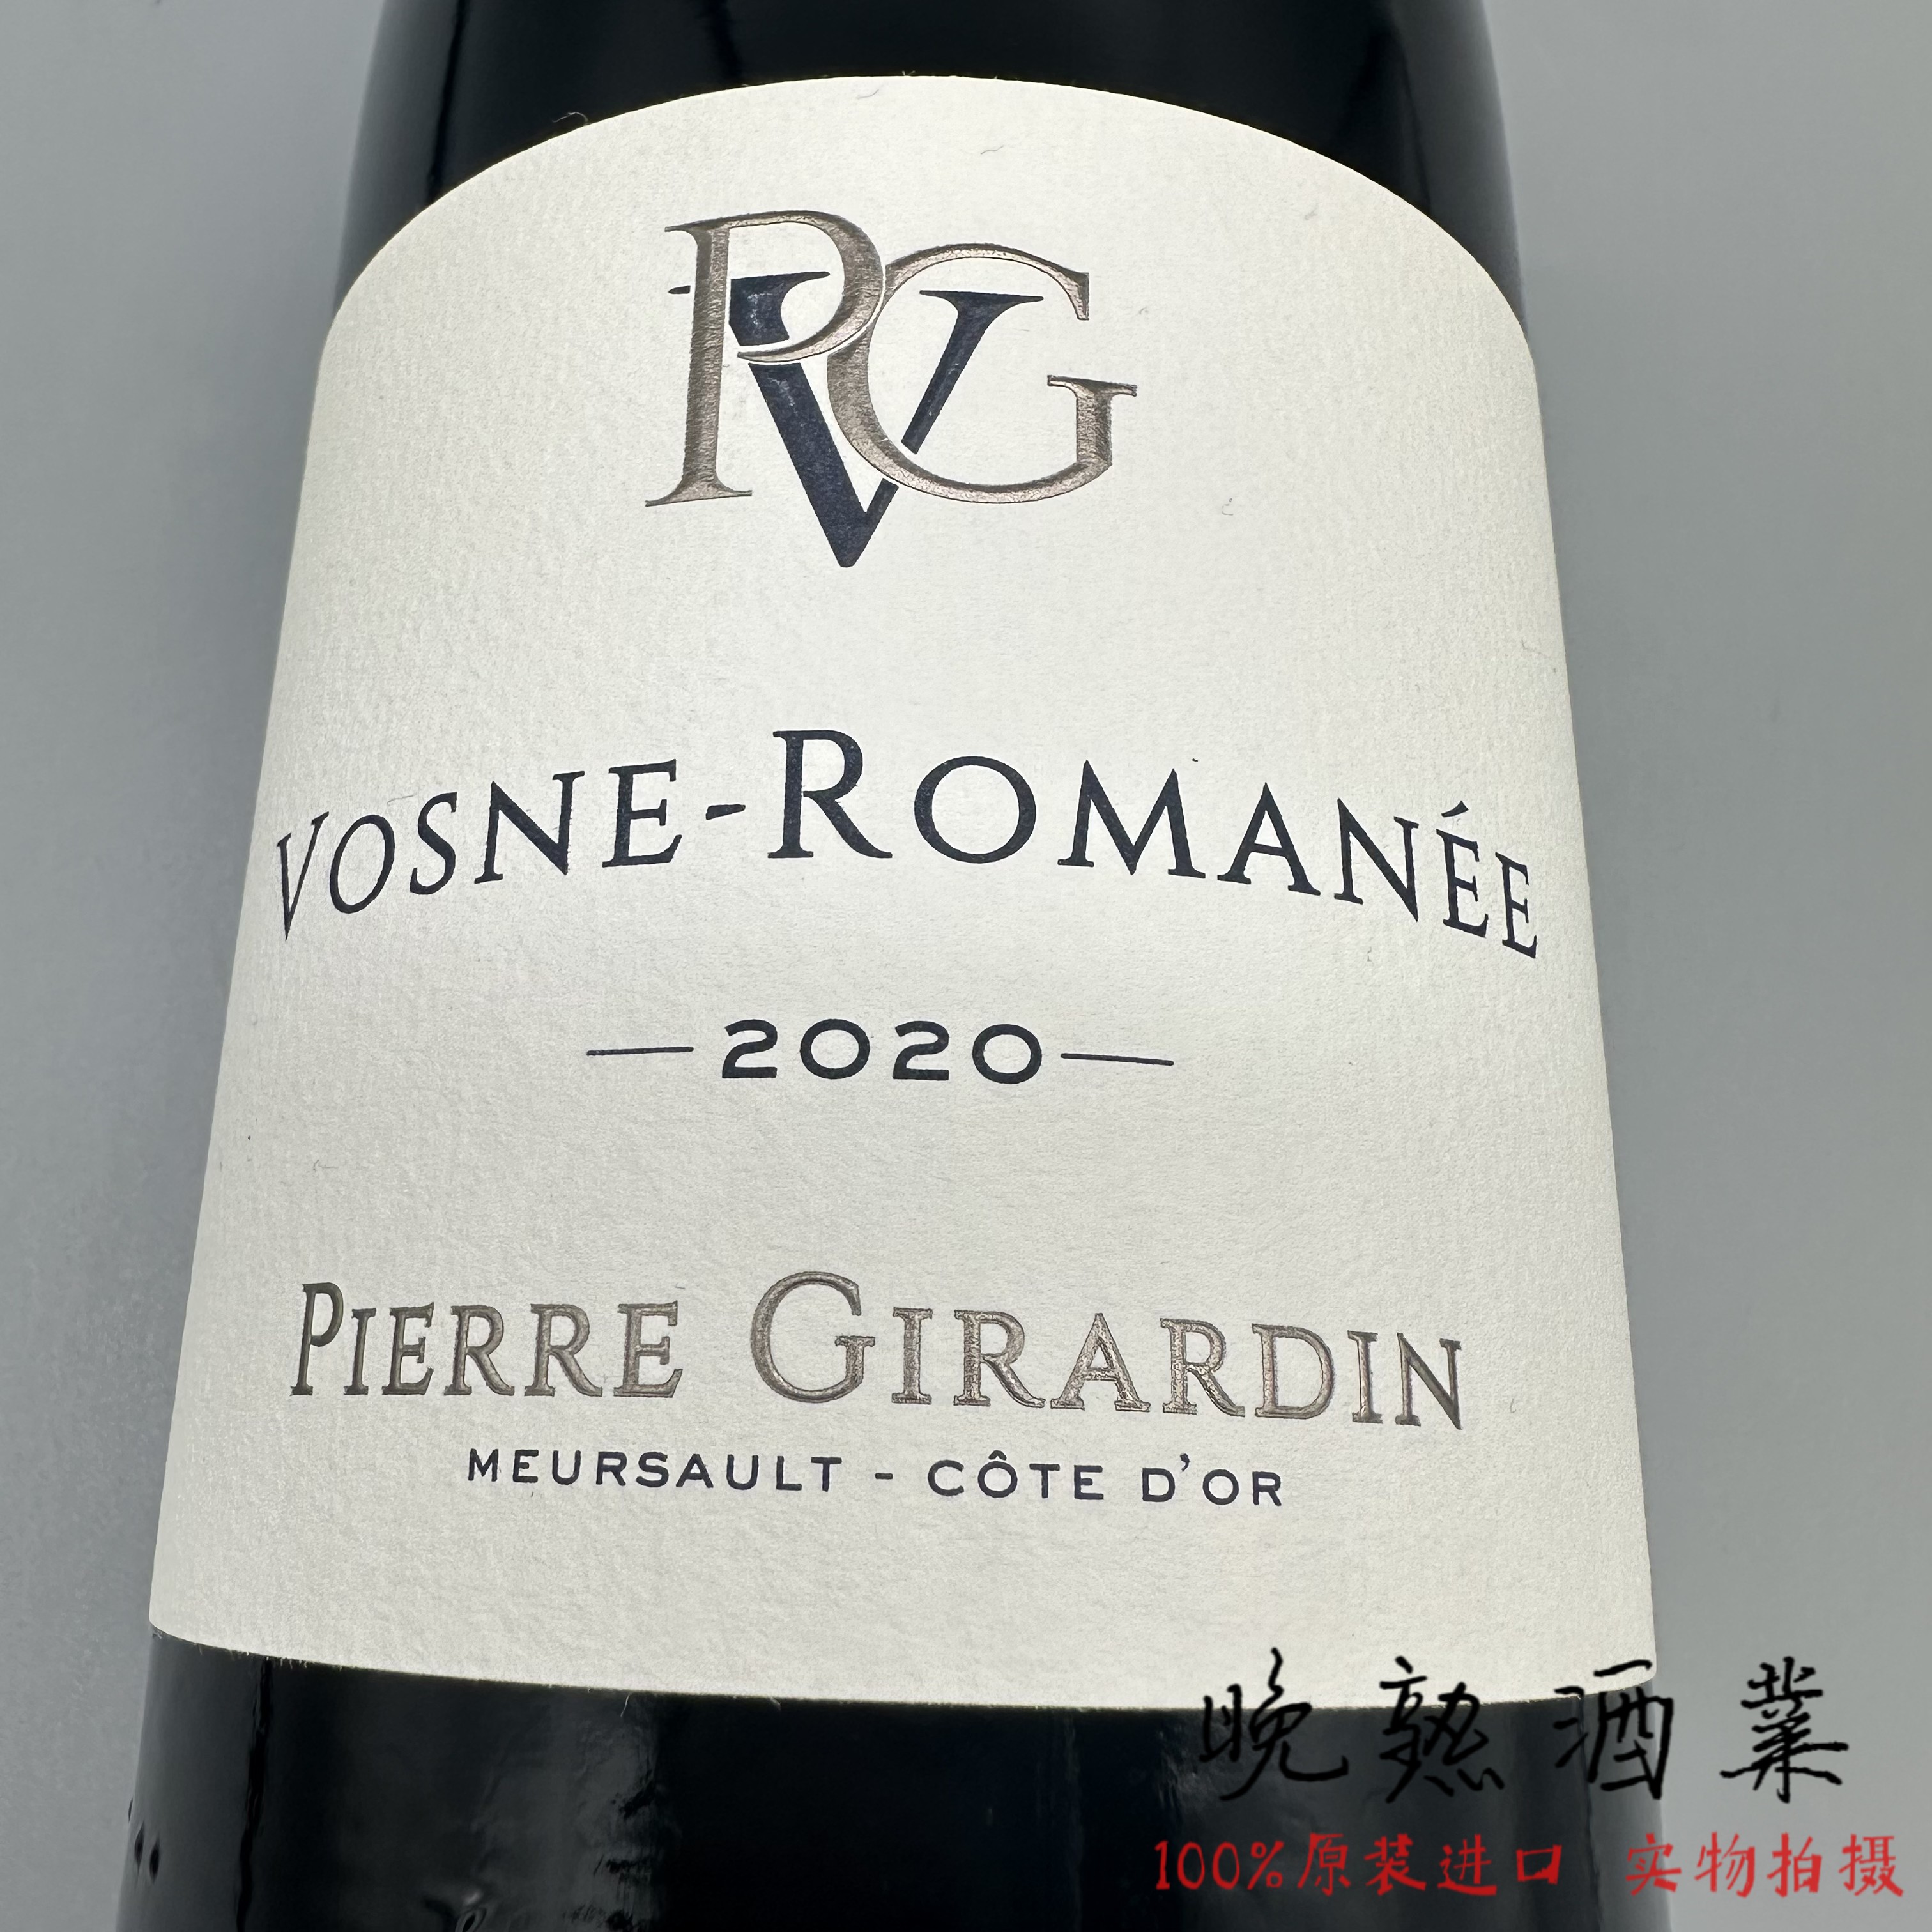 PVG 皮埃尔·吉拉尔丁酒庄沃恩罗曼尼干红葡萄酒 Pierre Girardin